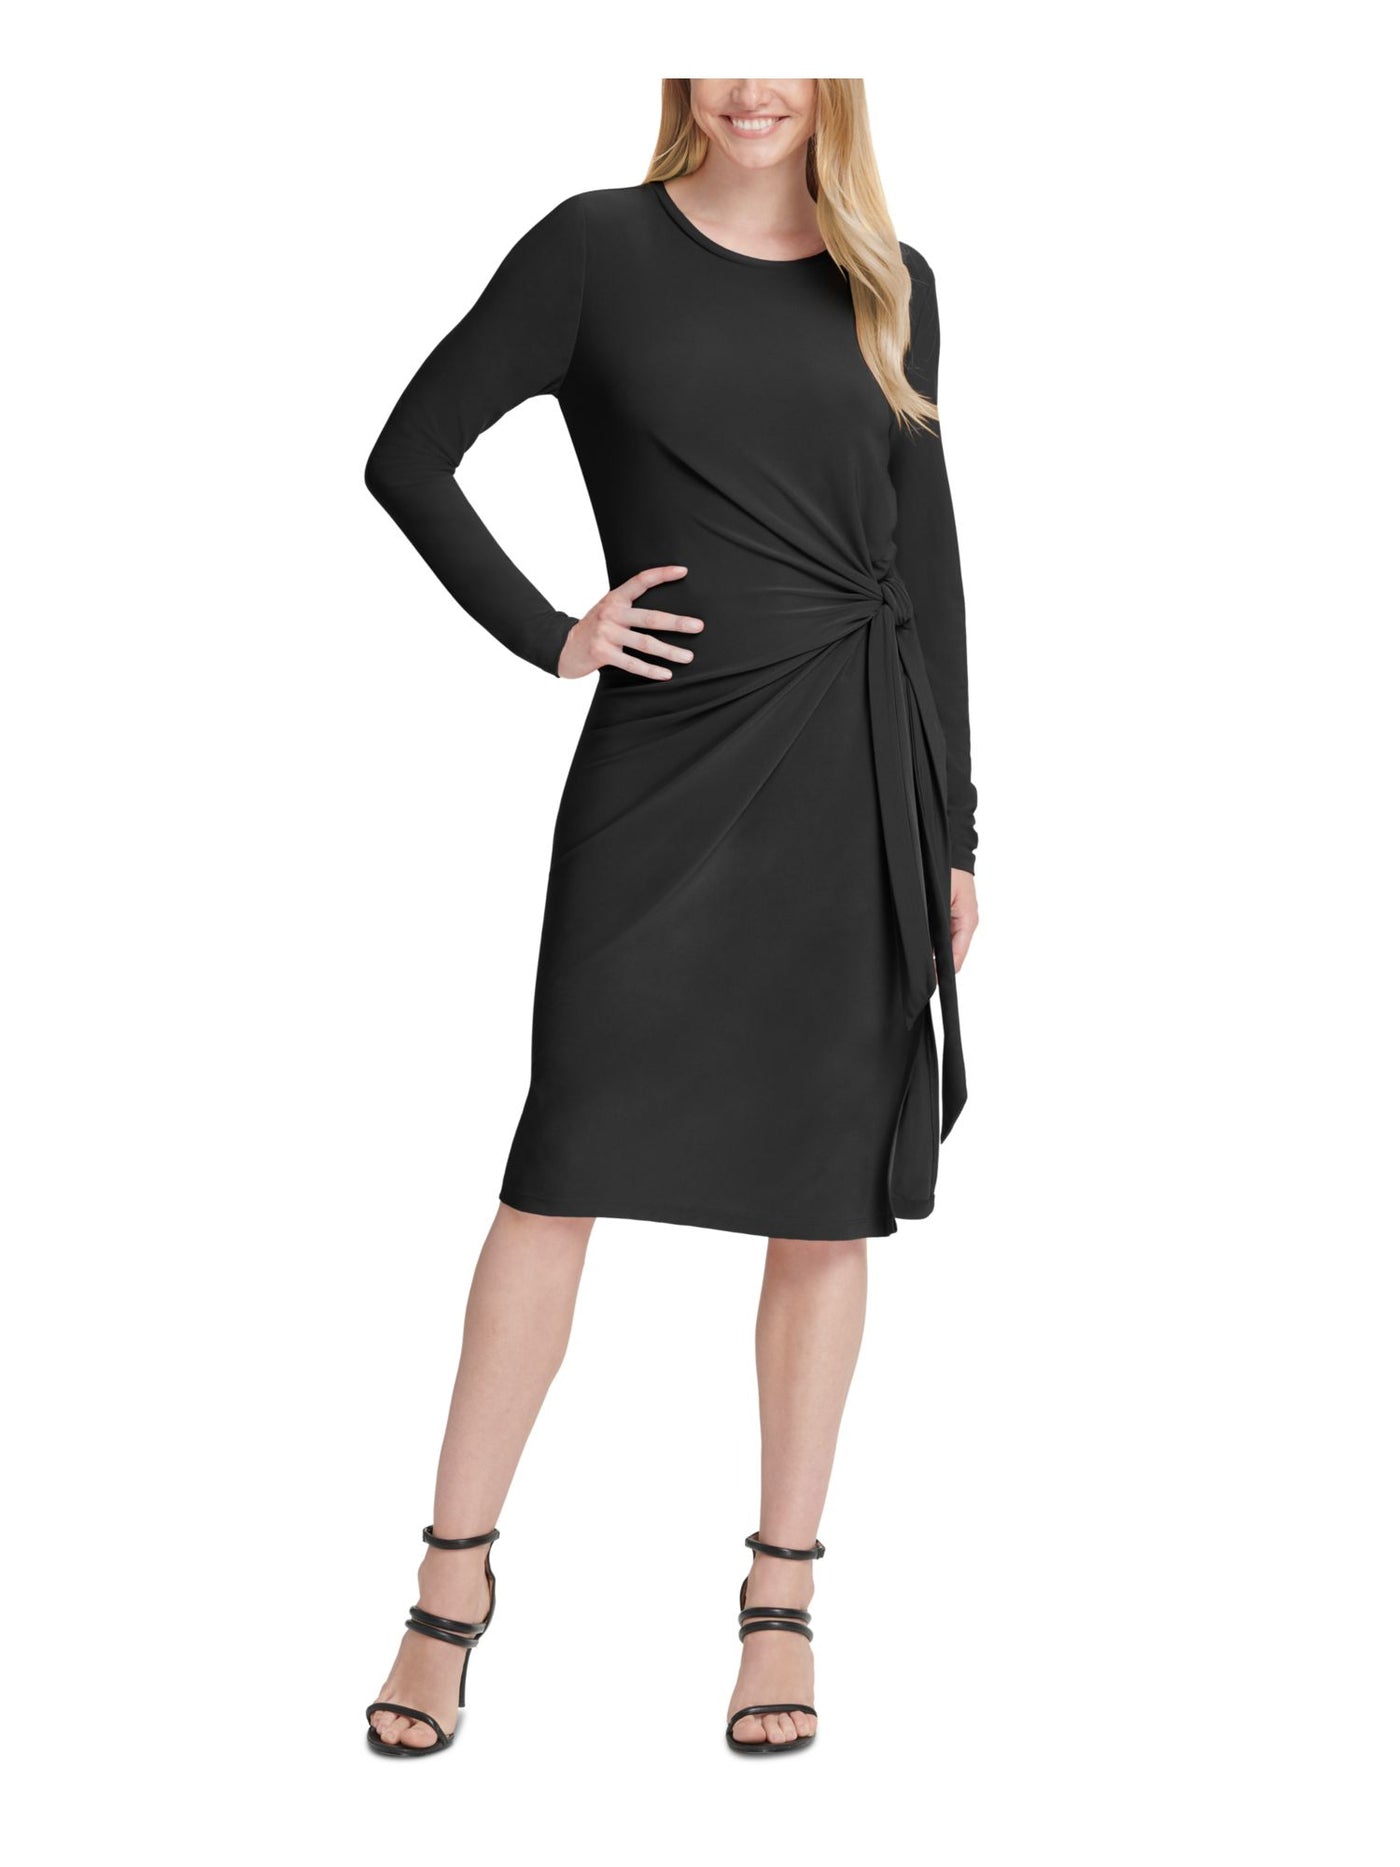 DKNY Womens Black Long Sleeve Crew Neck Knee Length Sheath Dress M